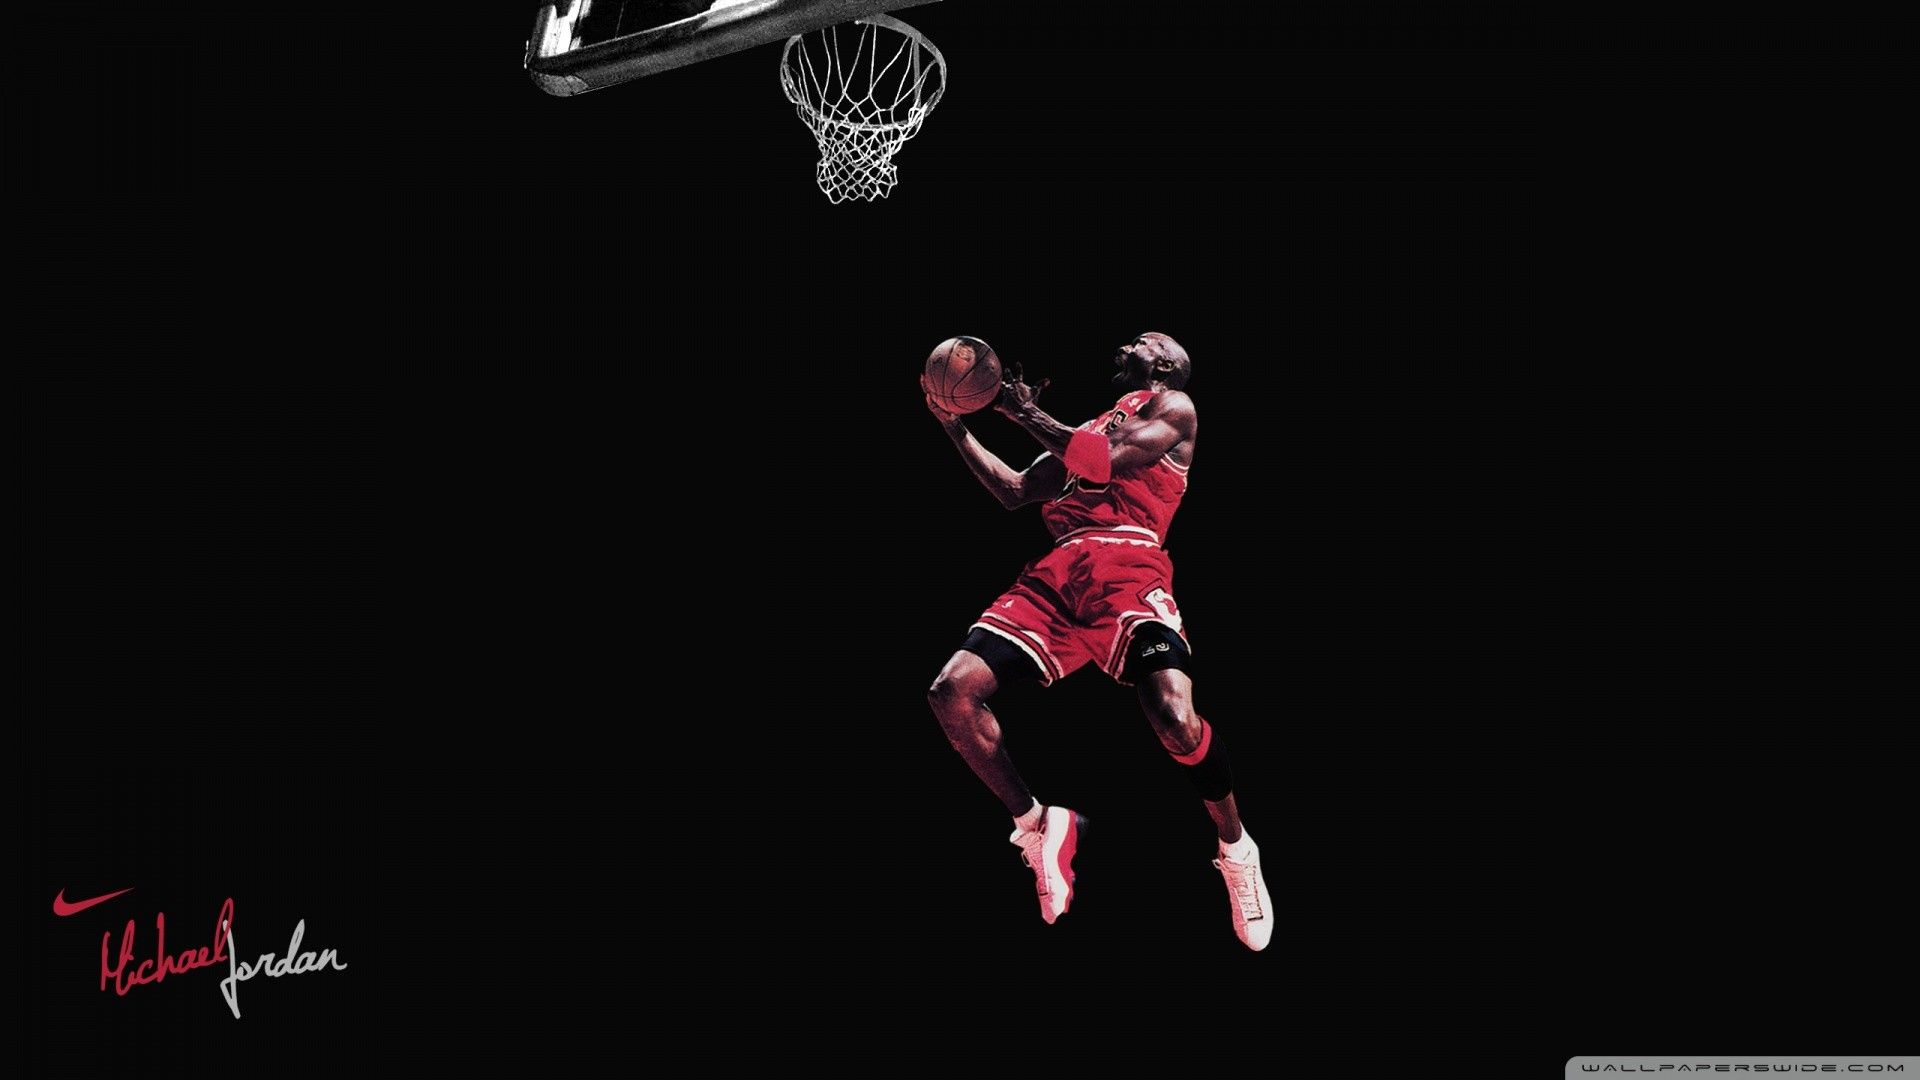 Michael Jordan Wallpaper 1920x1080